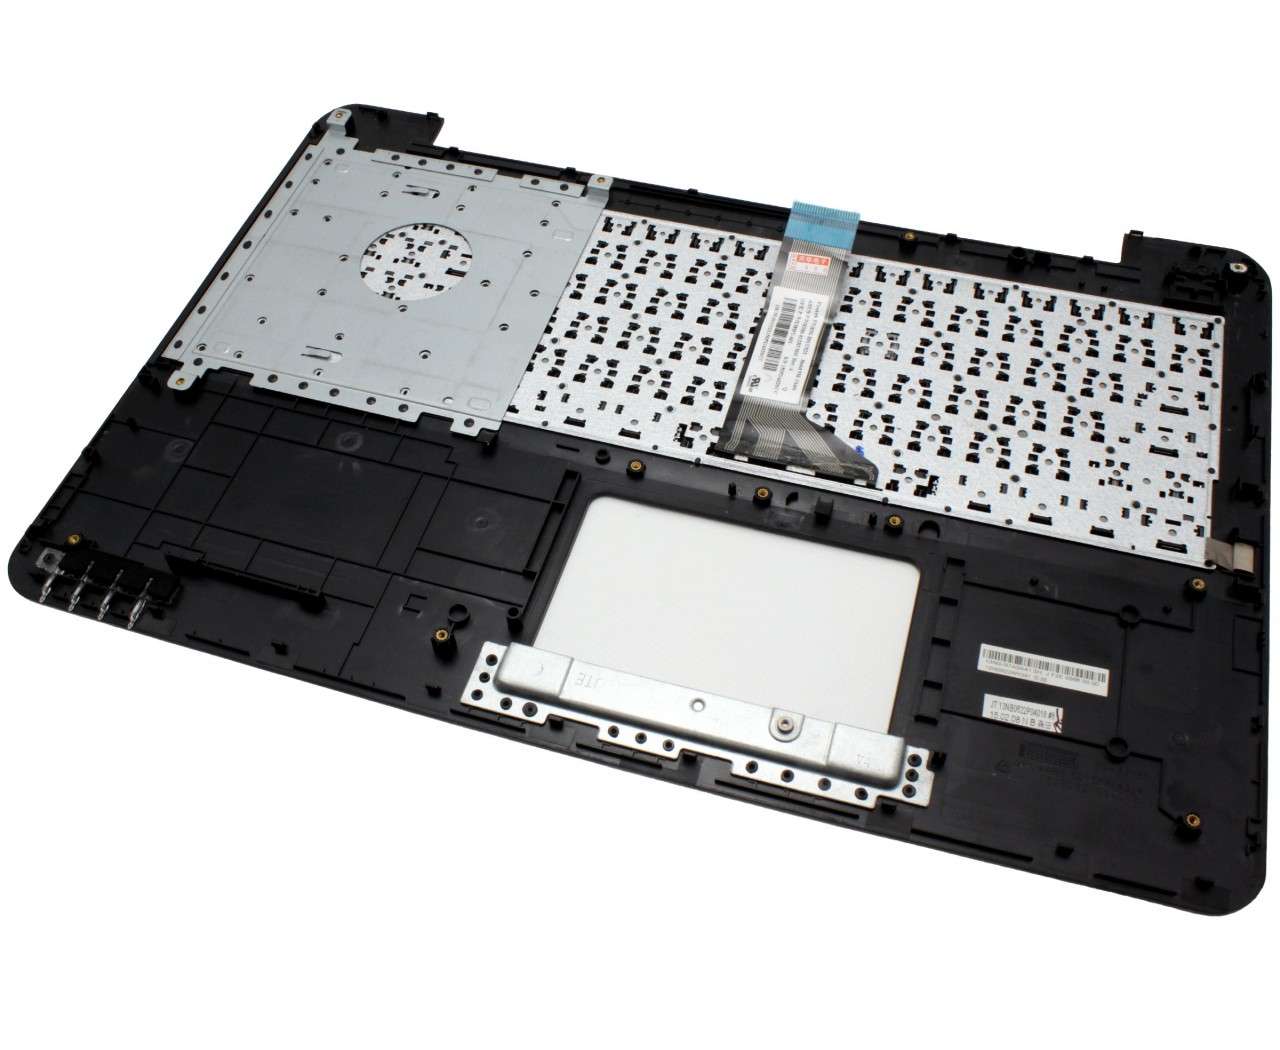 Tastatura Asus K555L Neagra cu Palmrest argintiu